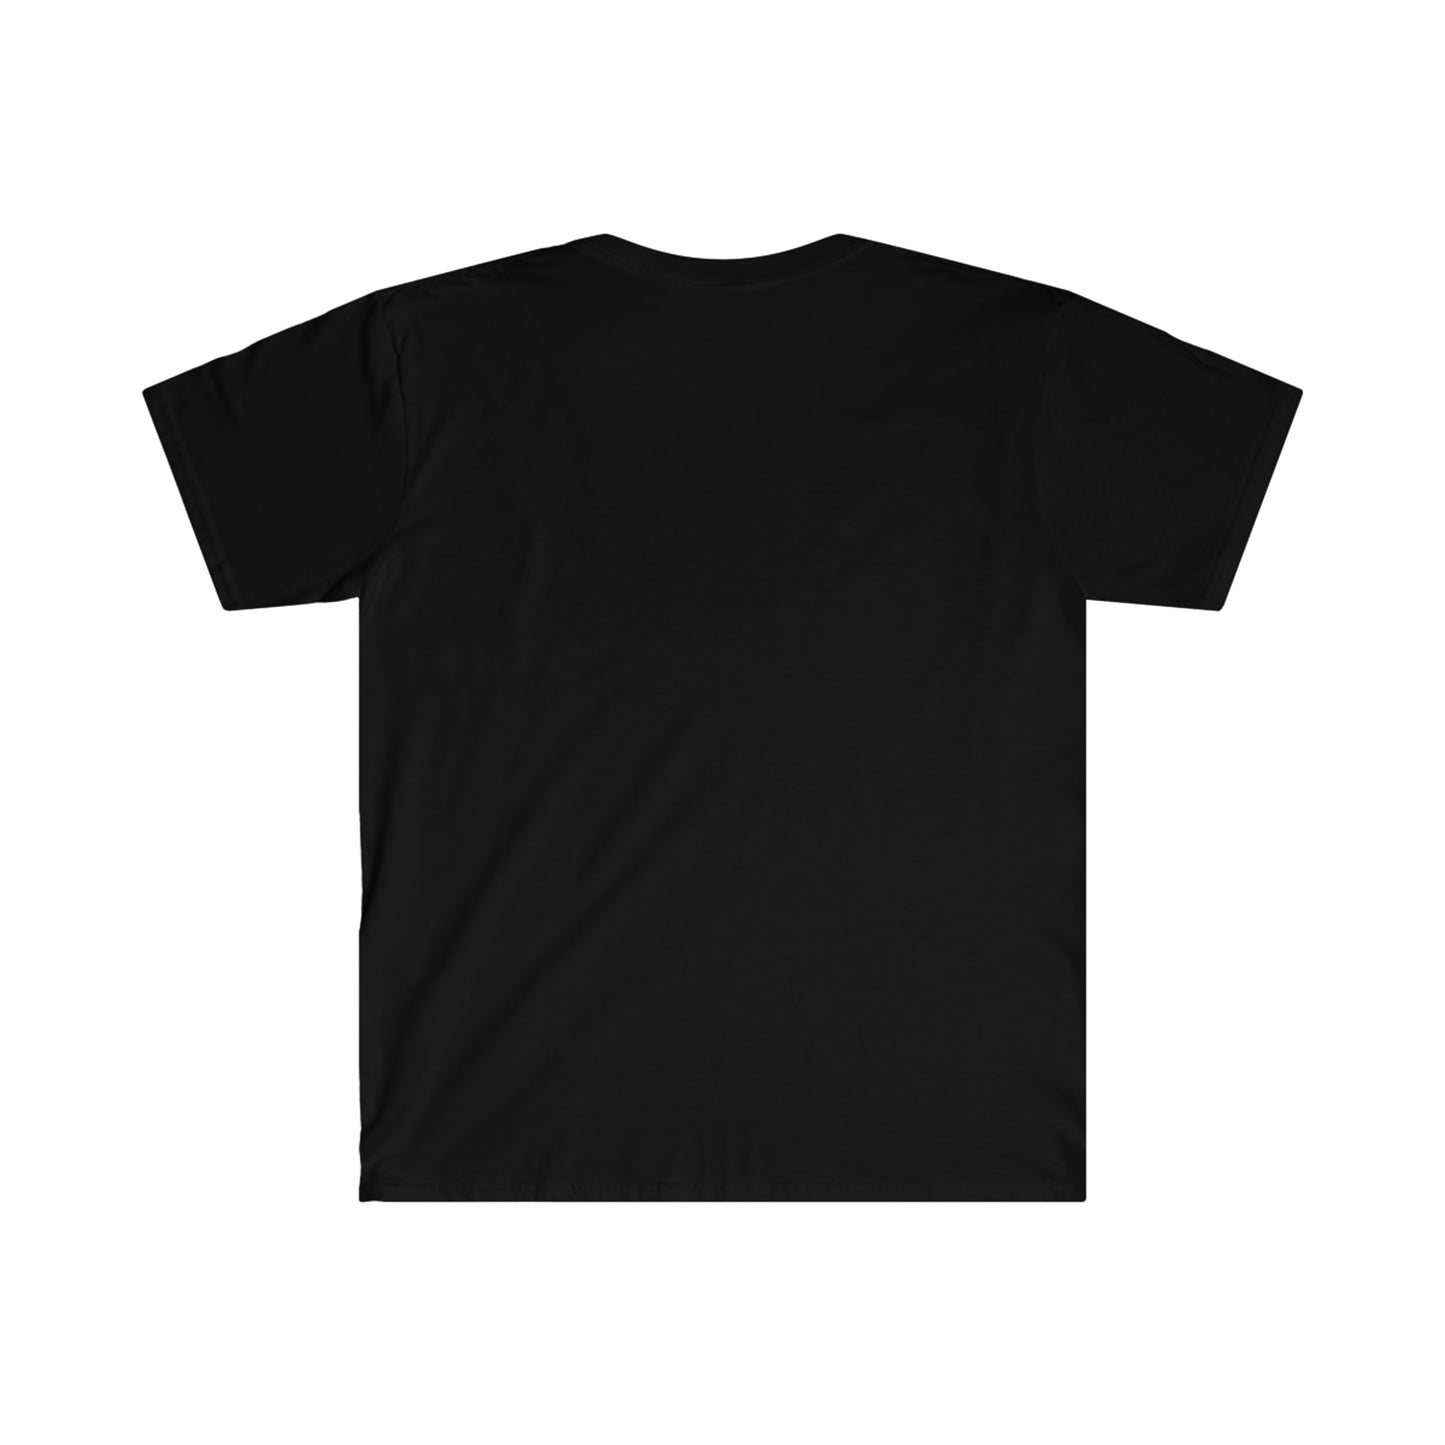 Android Waifu Collection T-Shirt